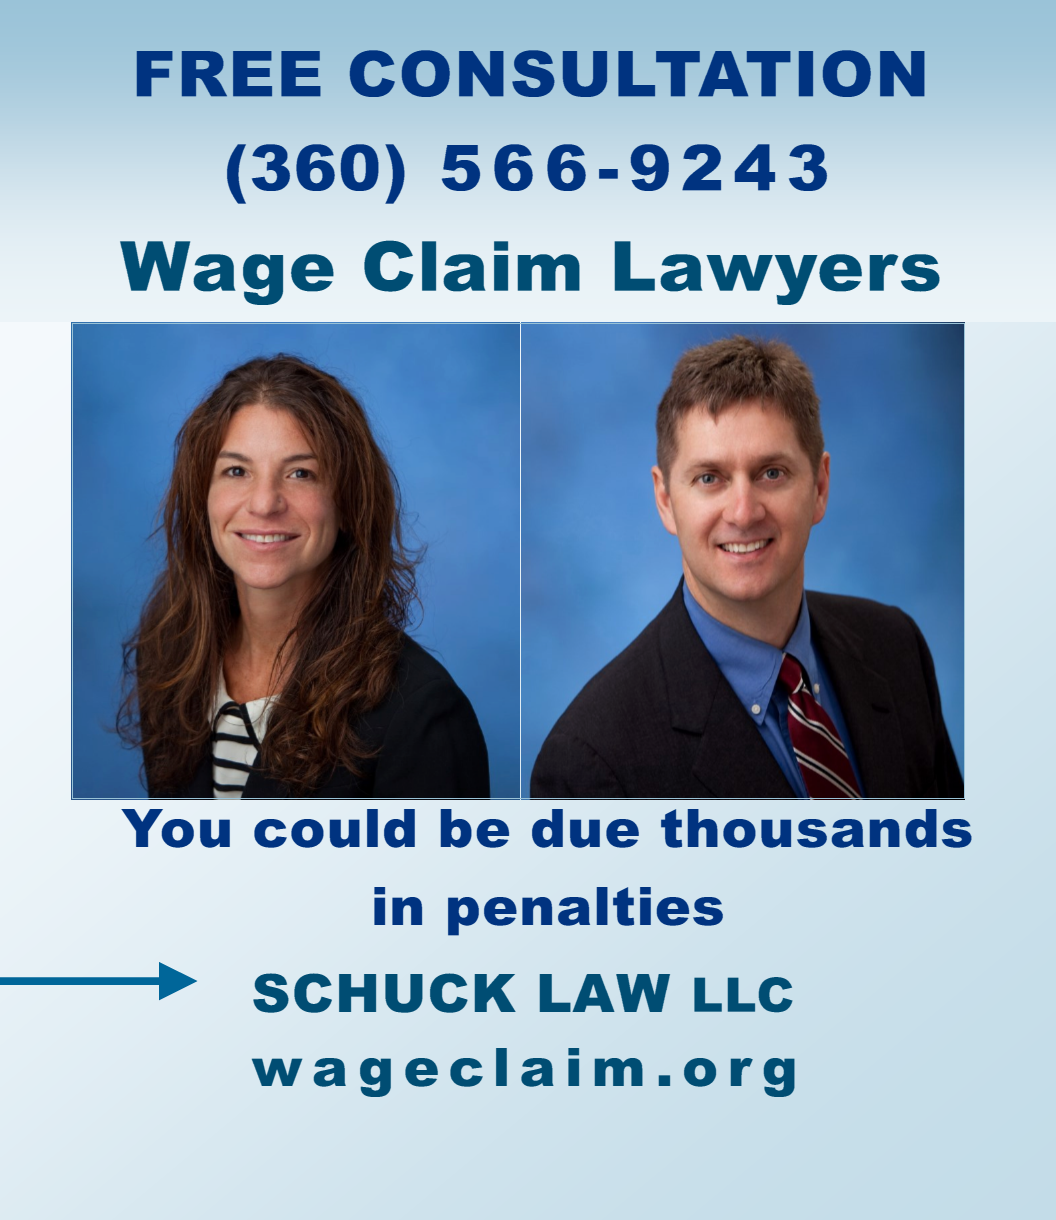 Schuck Law, LLC; Employment & Wage Lawyers in Oregon & Washington | 208 E 25th St, Vancouver, WA, 98663 | +1 (360) 566-9243